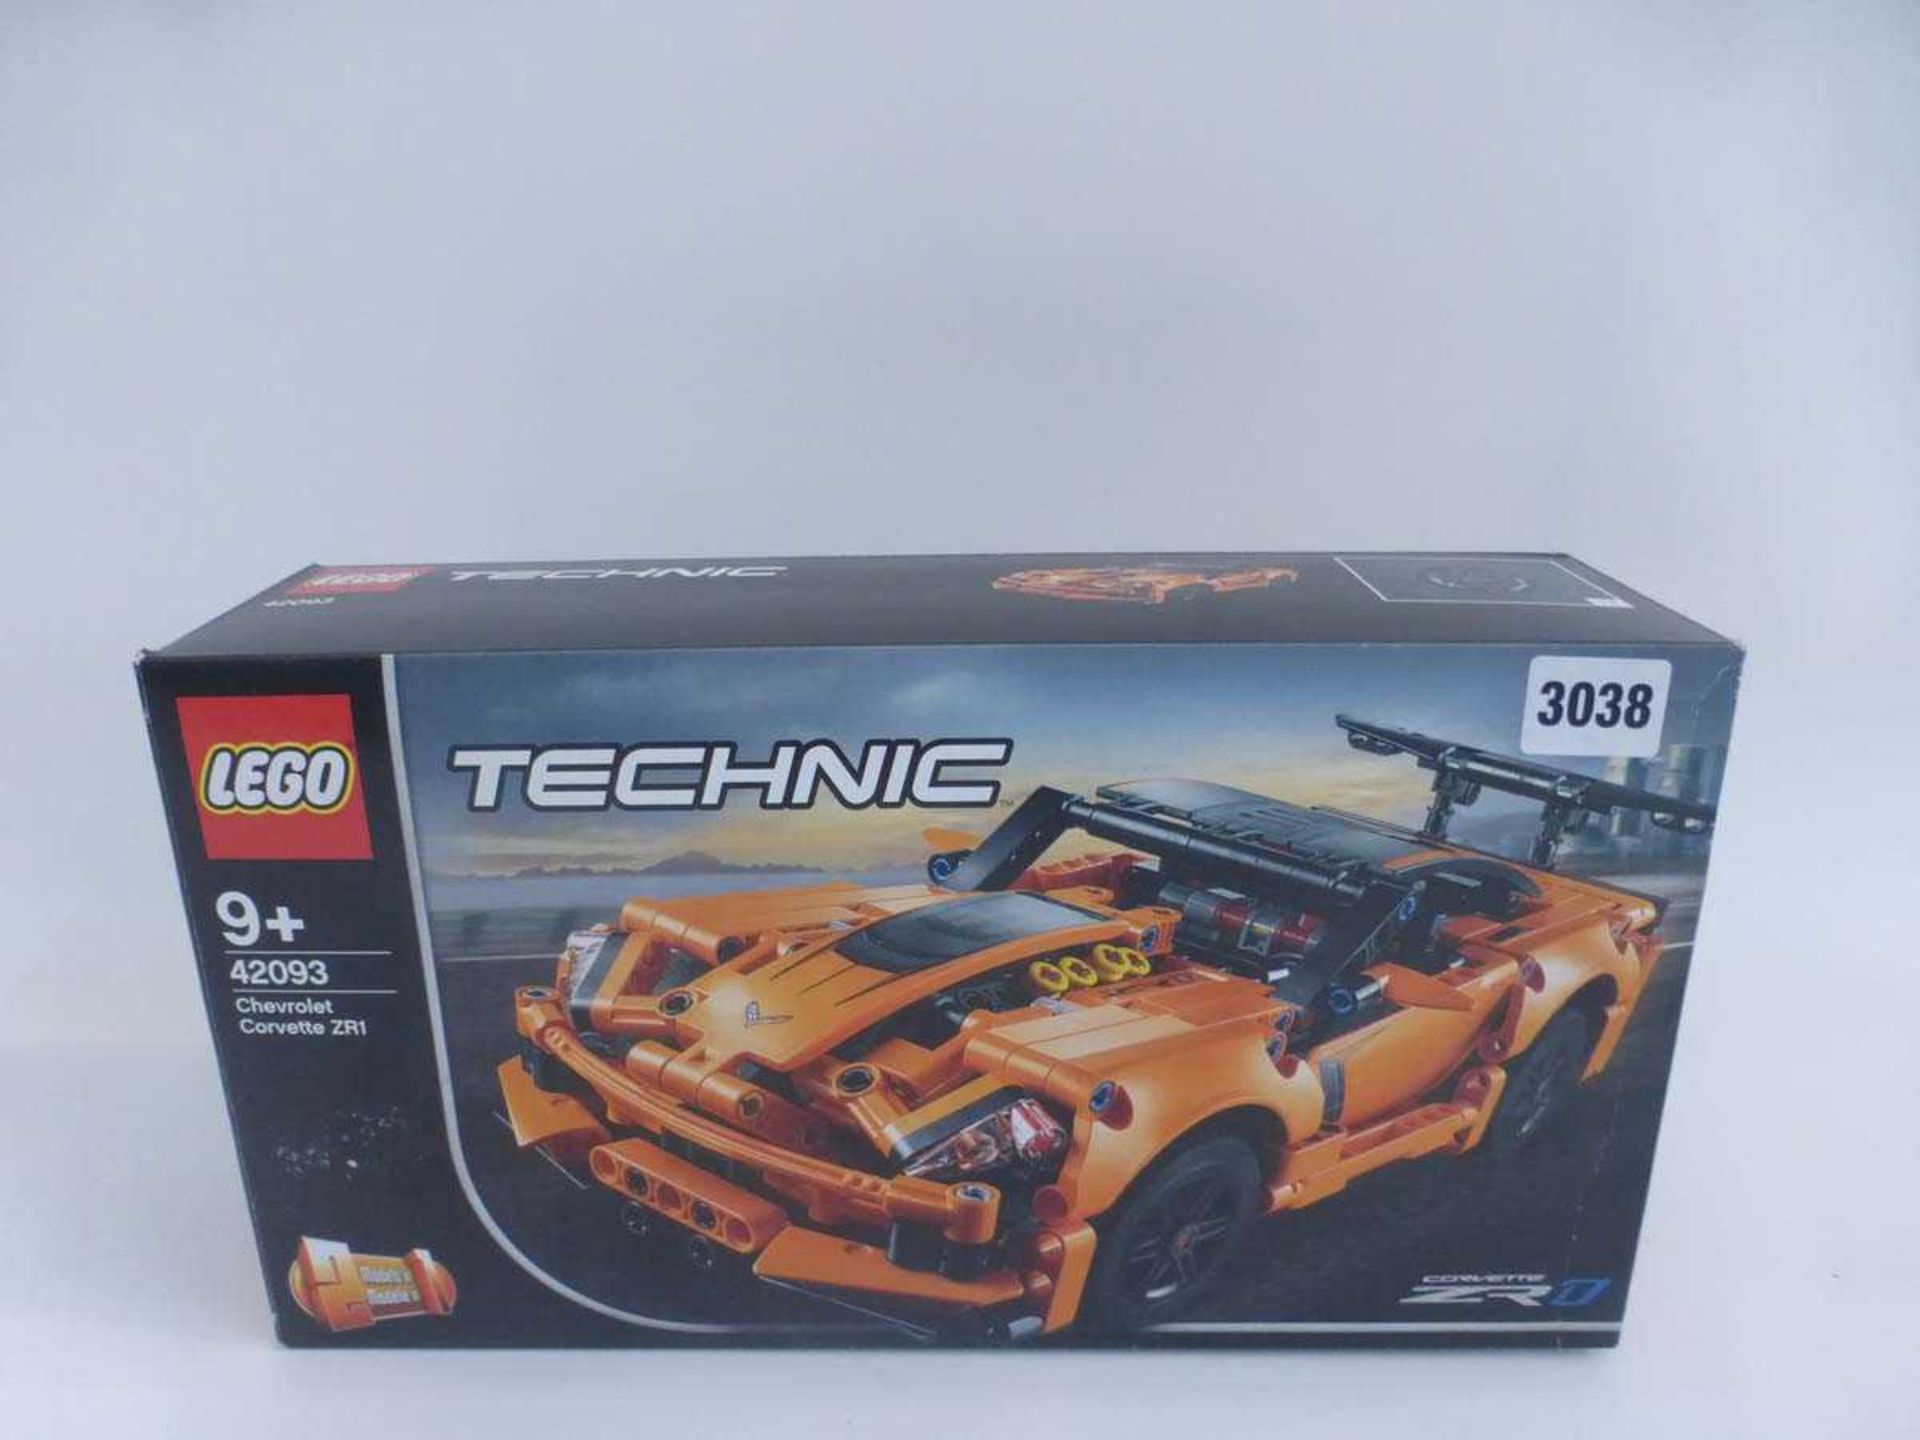 A Lego Technic 42093 Chevrolet Corvette ZR1 set, boxedContents unchecked